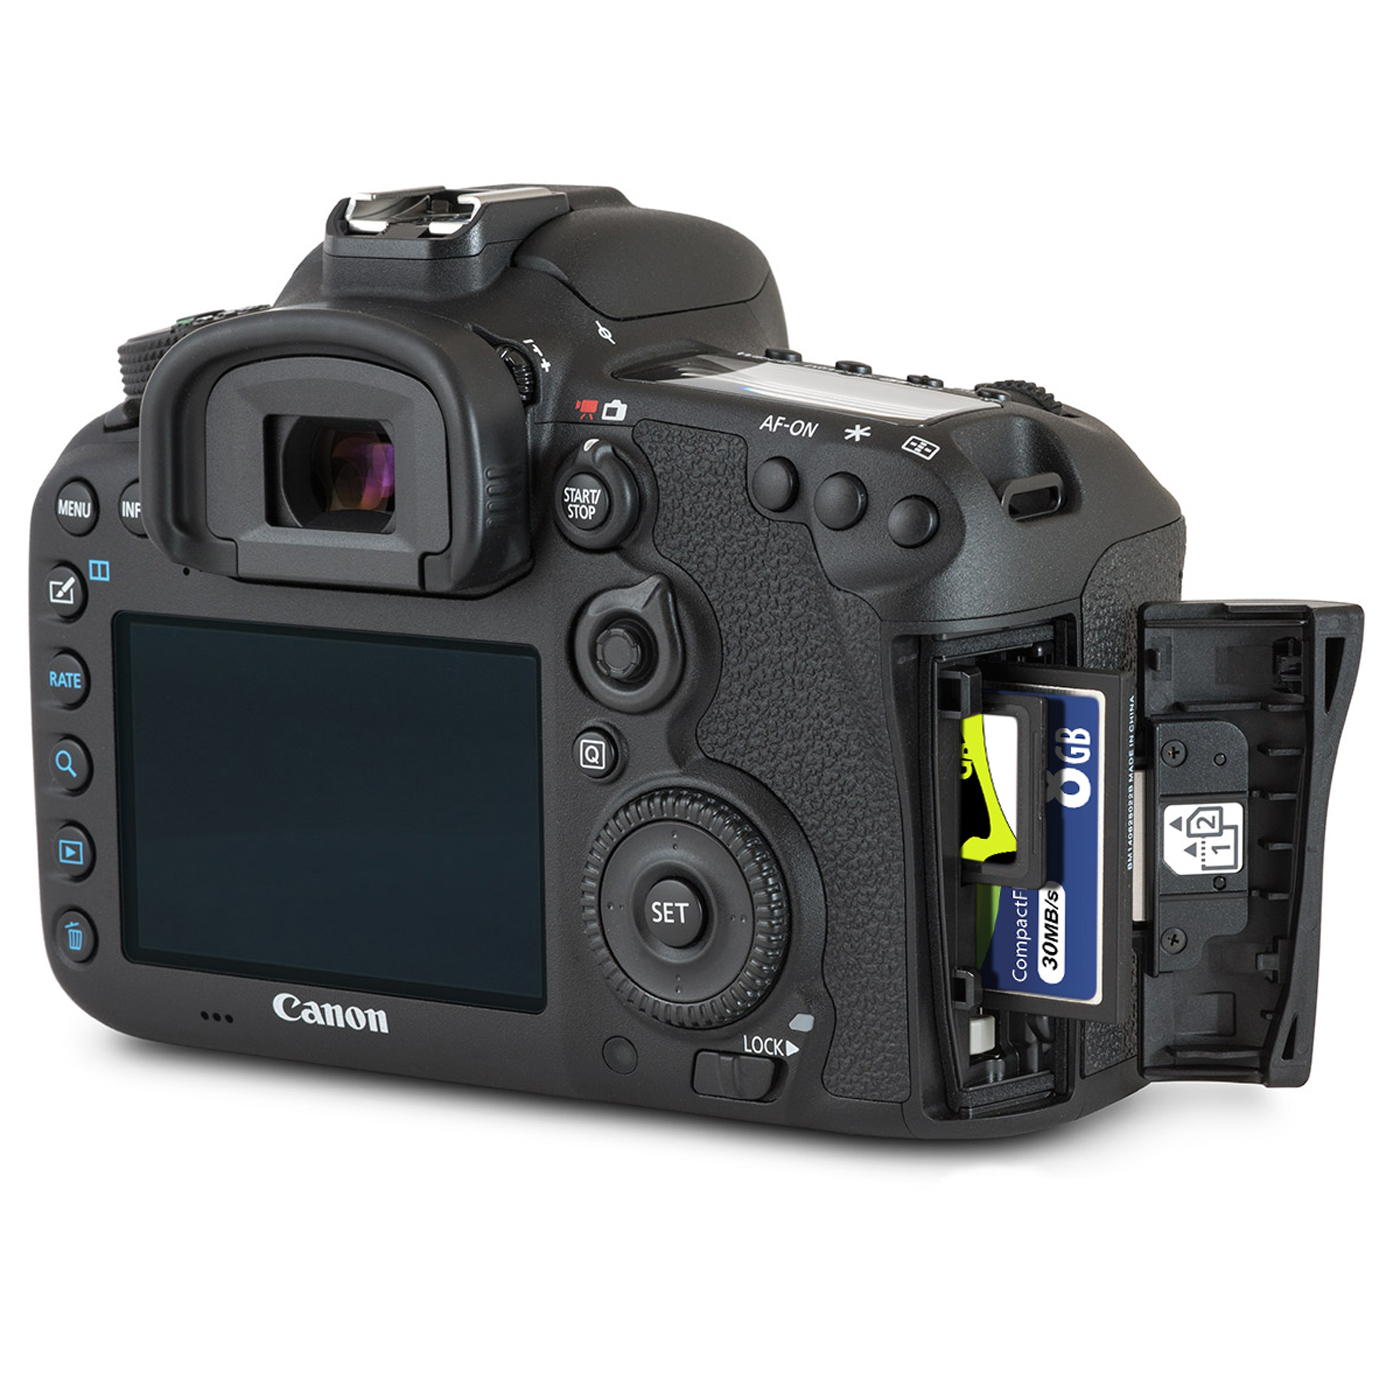 Vida IT® 8GB CF Compact Flash Memory Card High Speed 200X 30MB/s for SLR Digital Camera